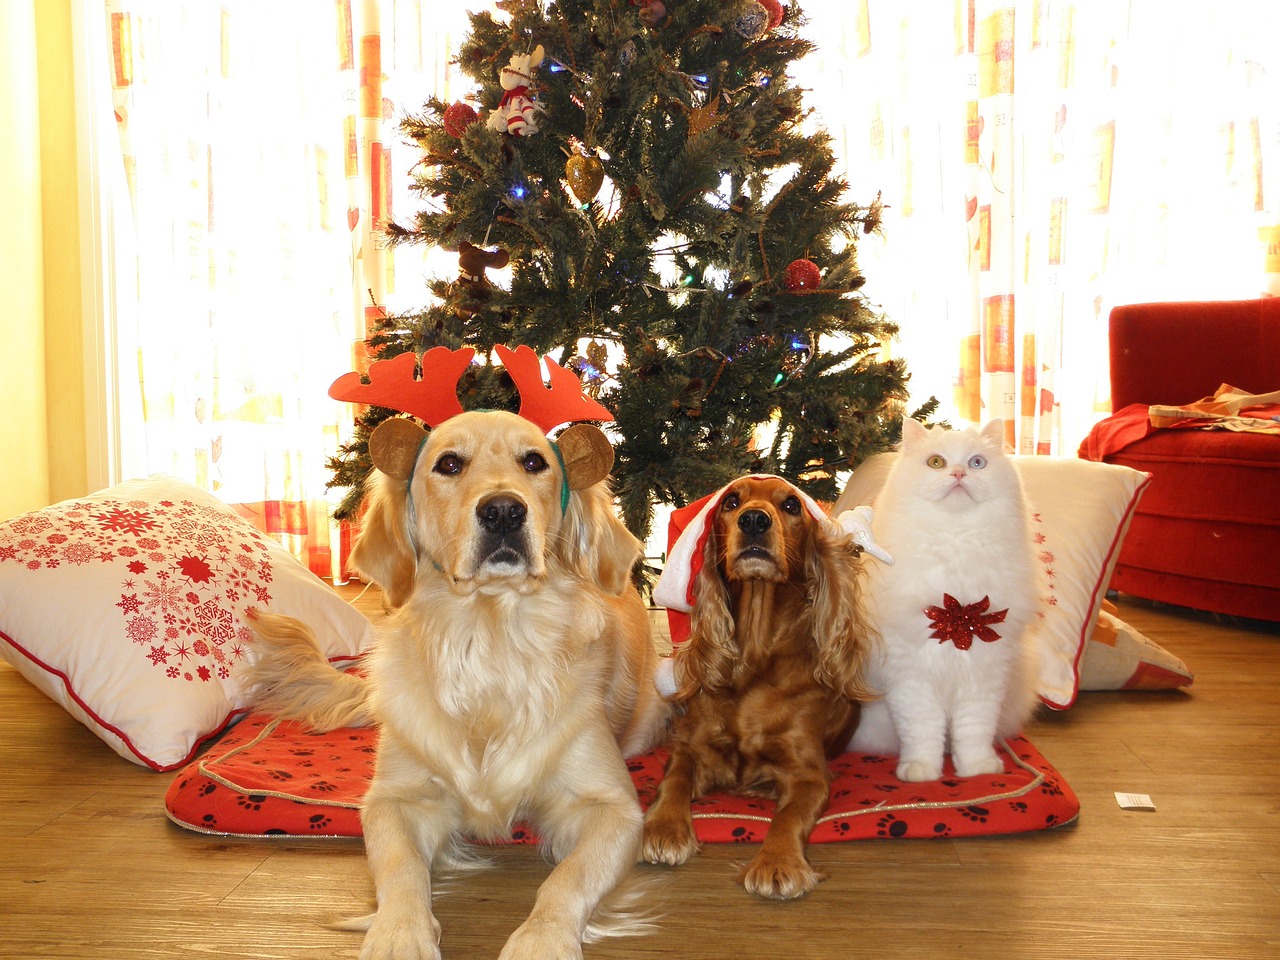 Creating Memorable Holiday Themed Dog Photos